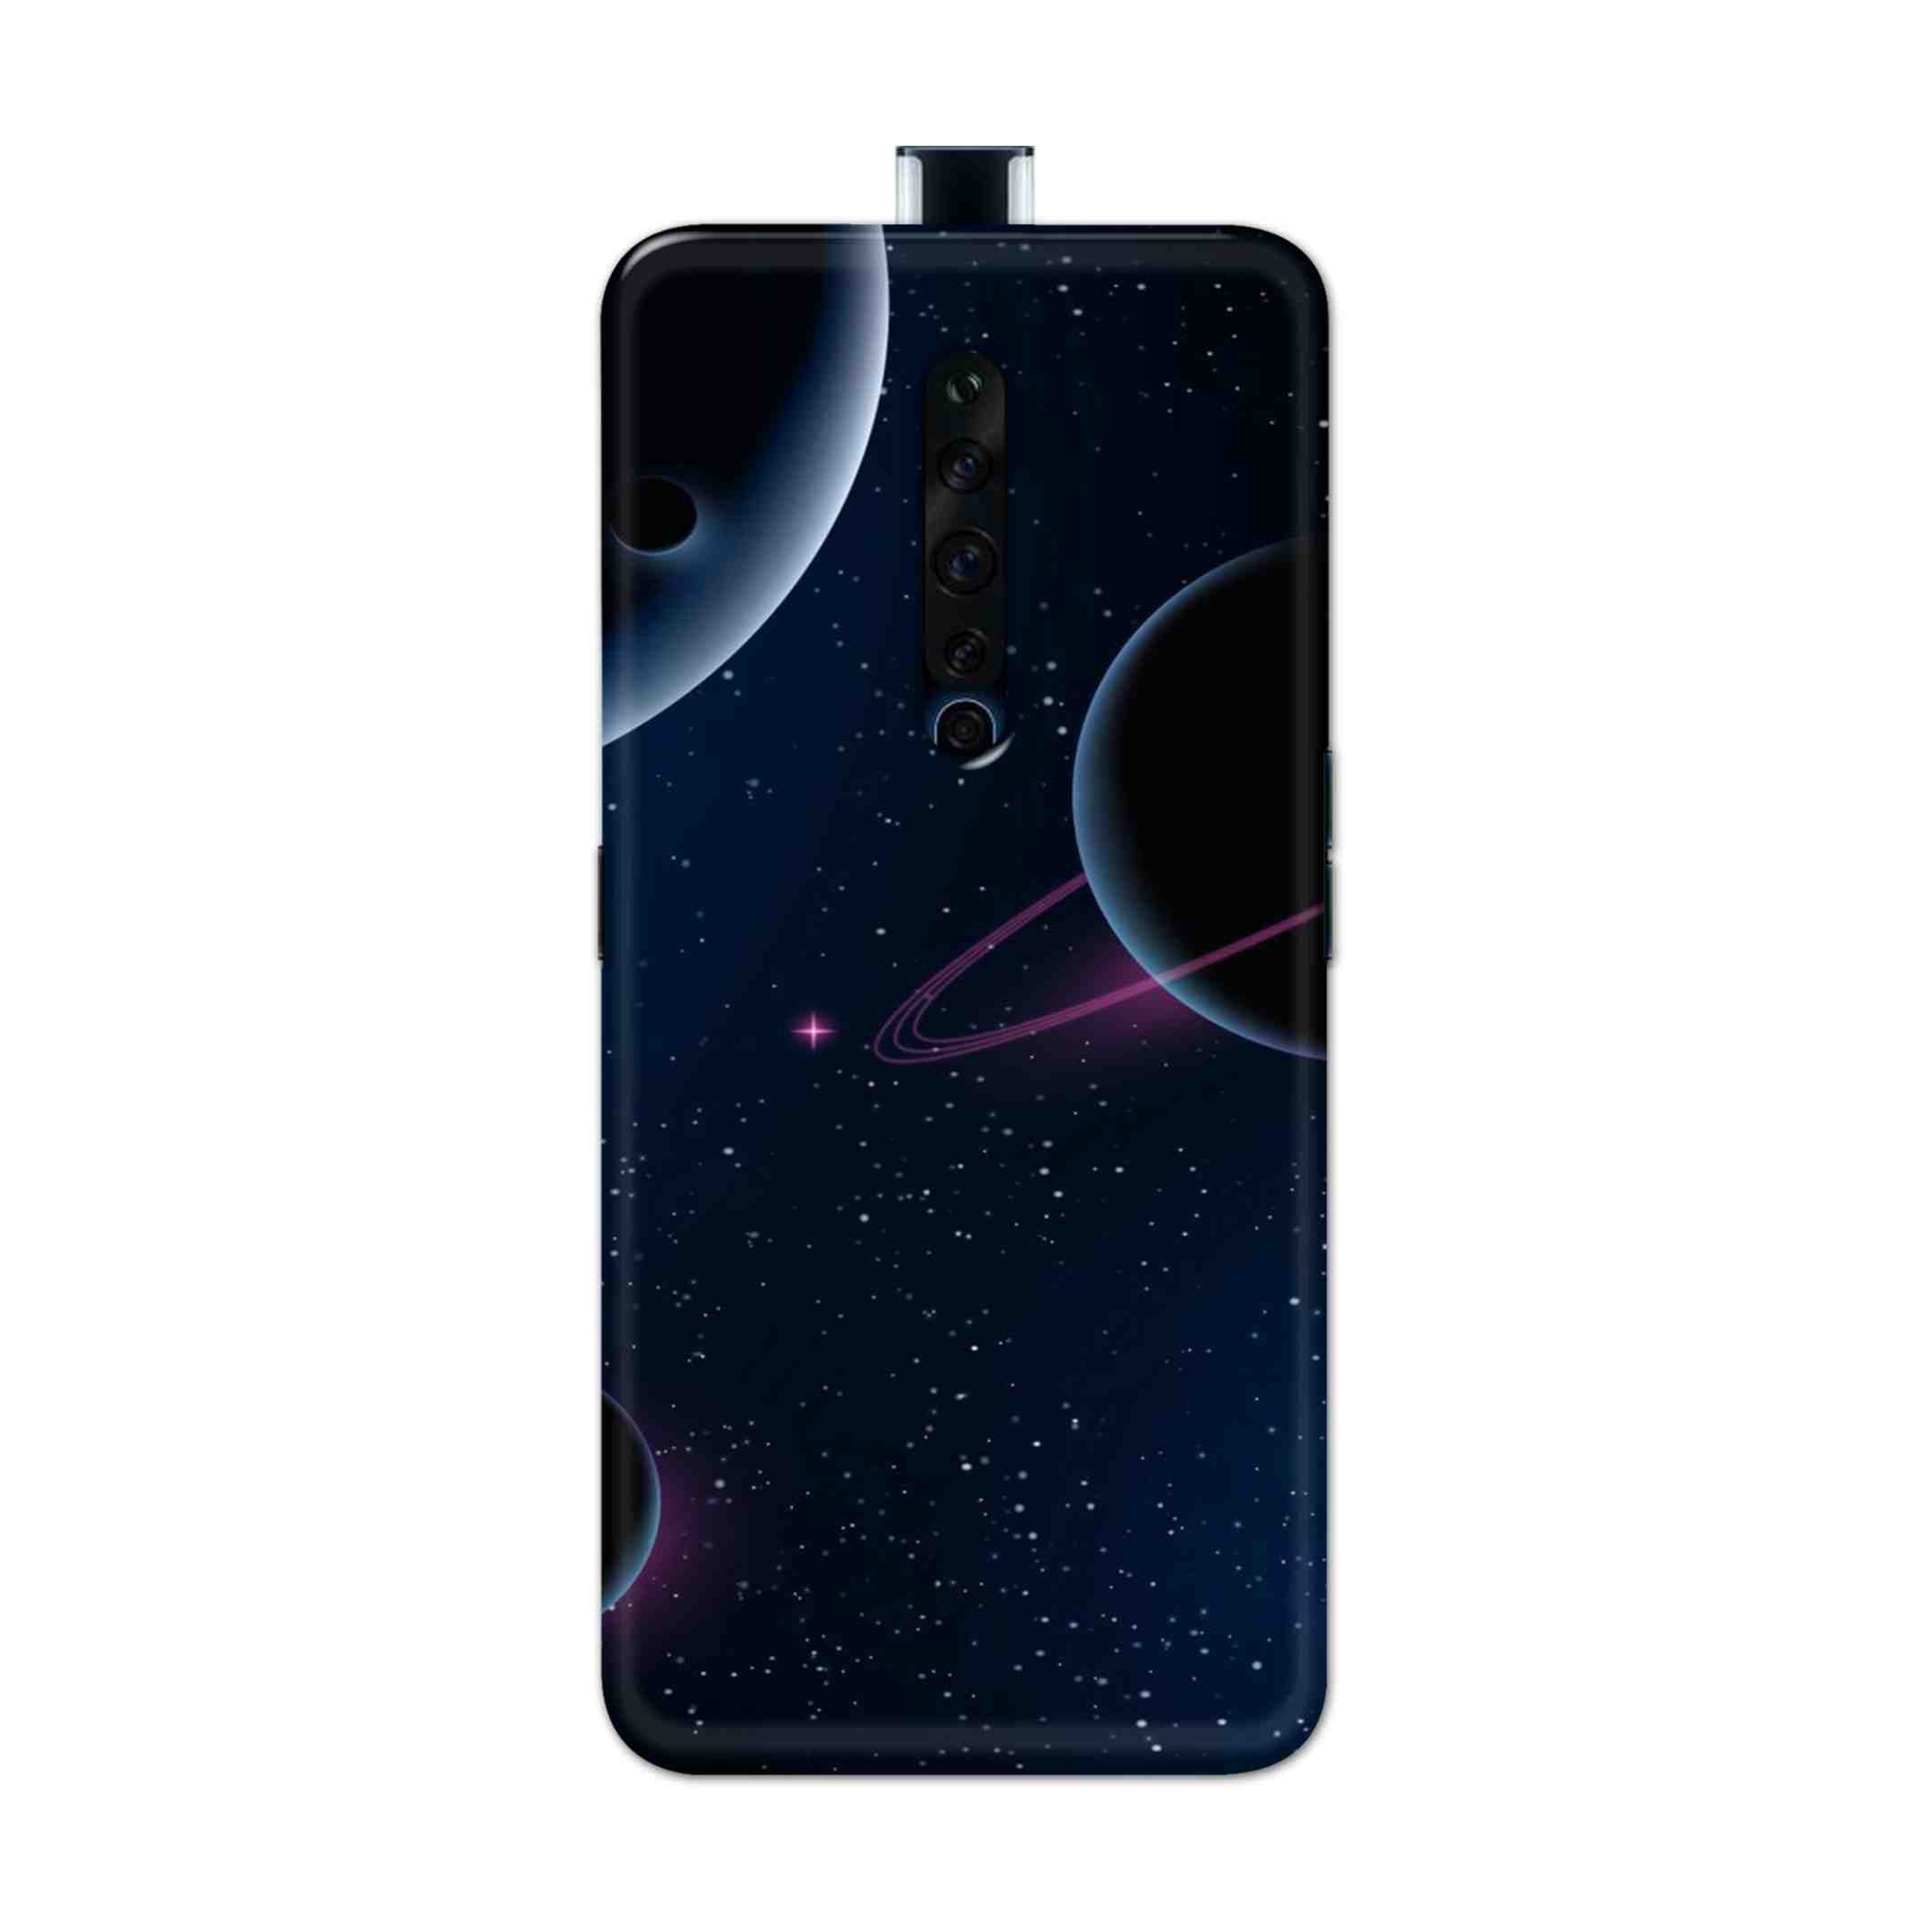 Buy Night Space Hard Back Mobile Phone Case Cover For Oppo Reno 2Z Online